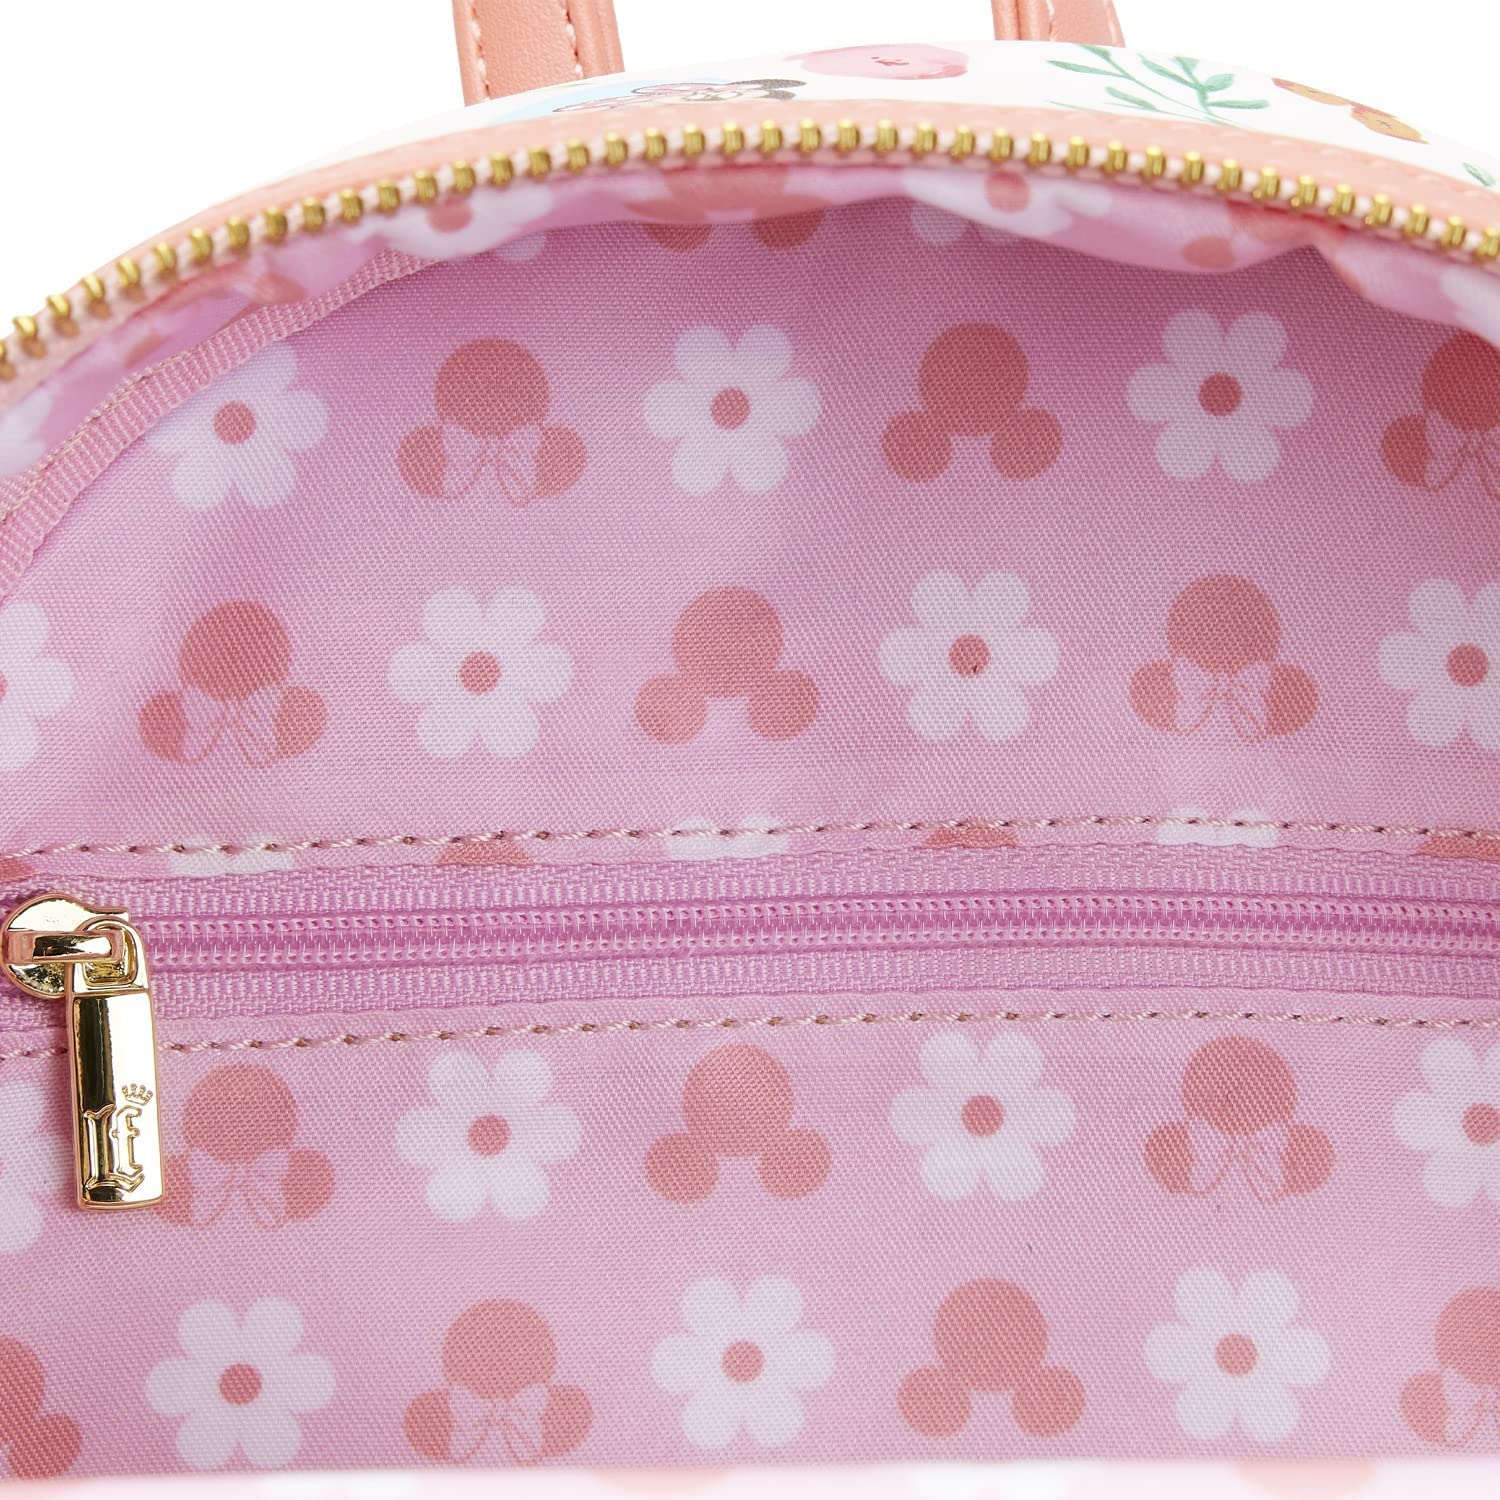 Loungefly Disney Mickey Minnie Mouse Mini Backpack Handbag AOP Floral